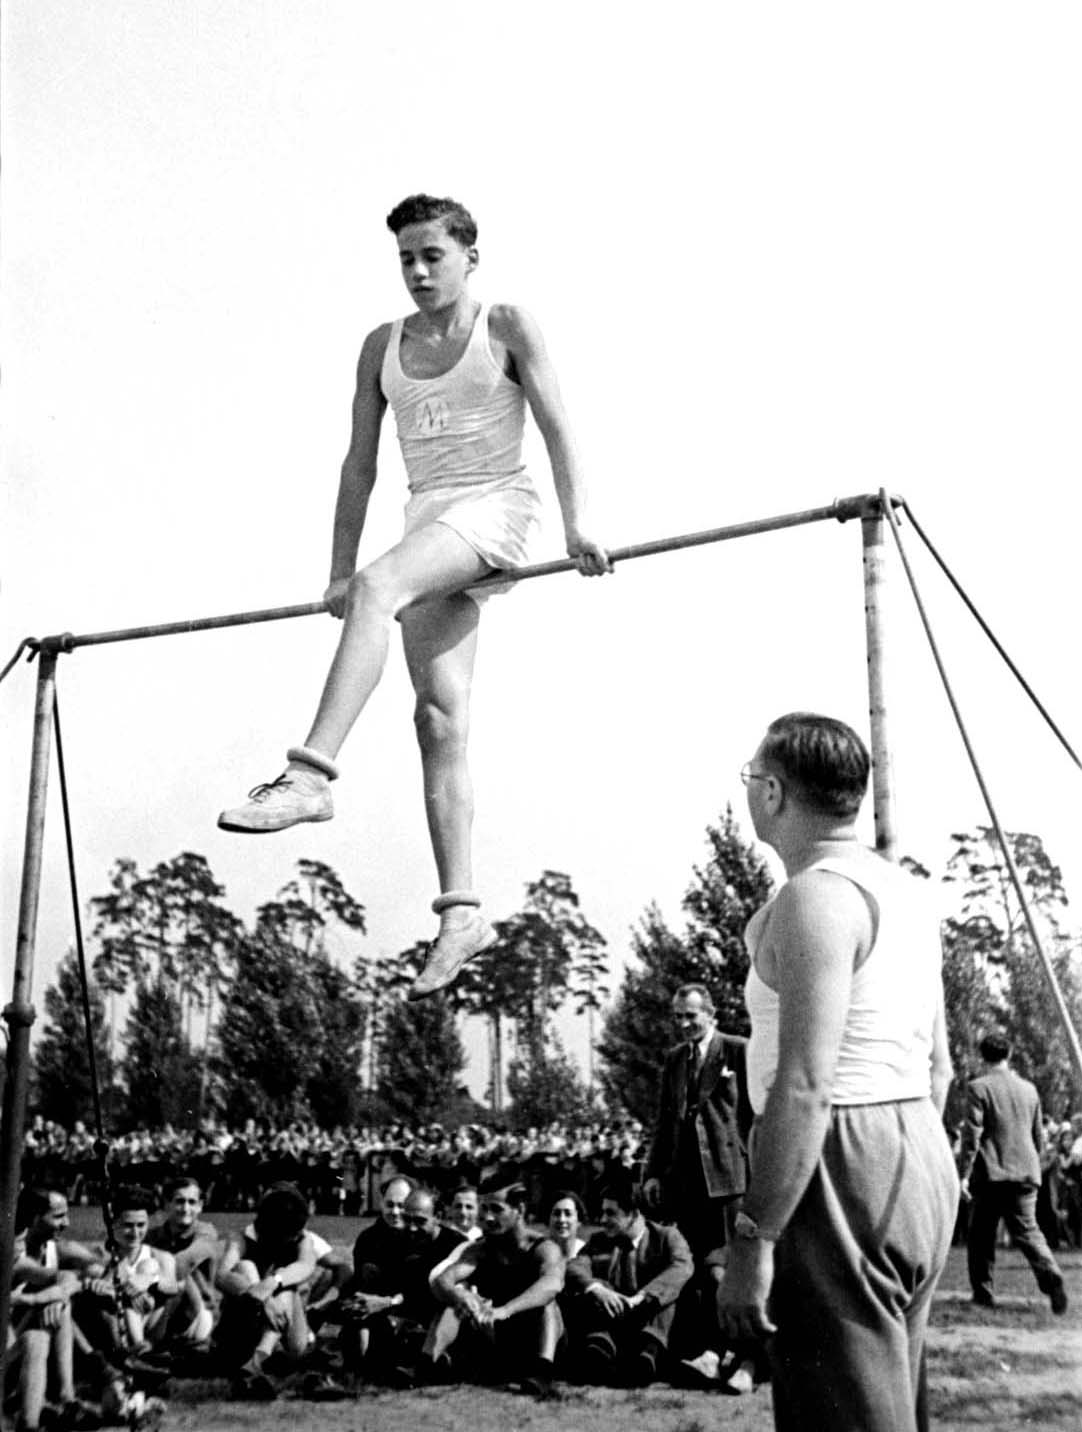 Gymnastics at a sports event for Jewish schools, Berlin, Germany, 1935